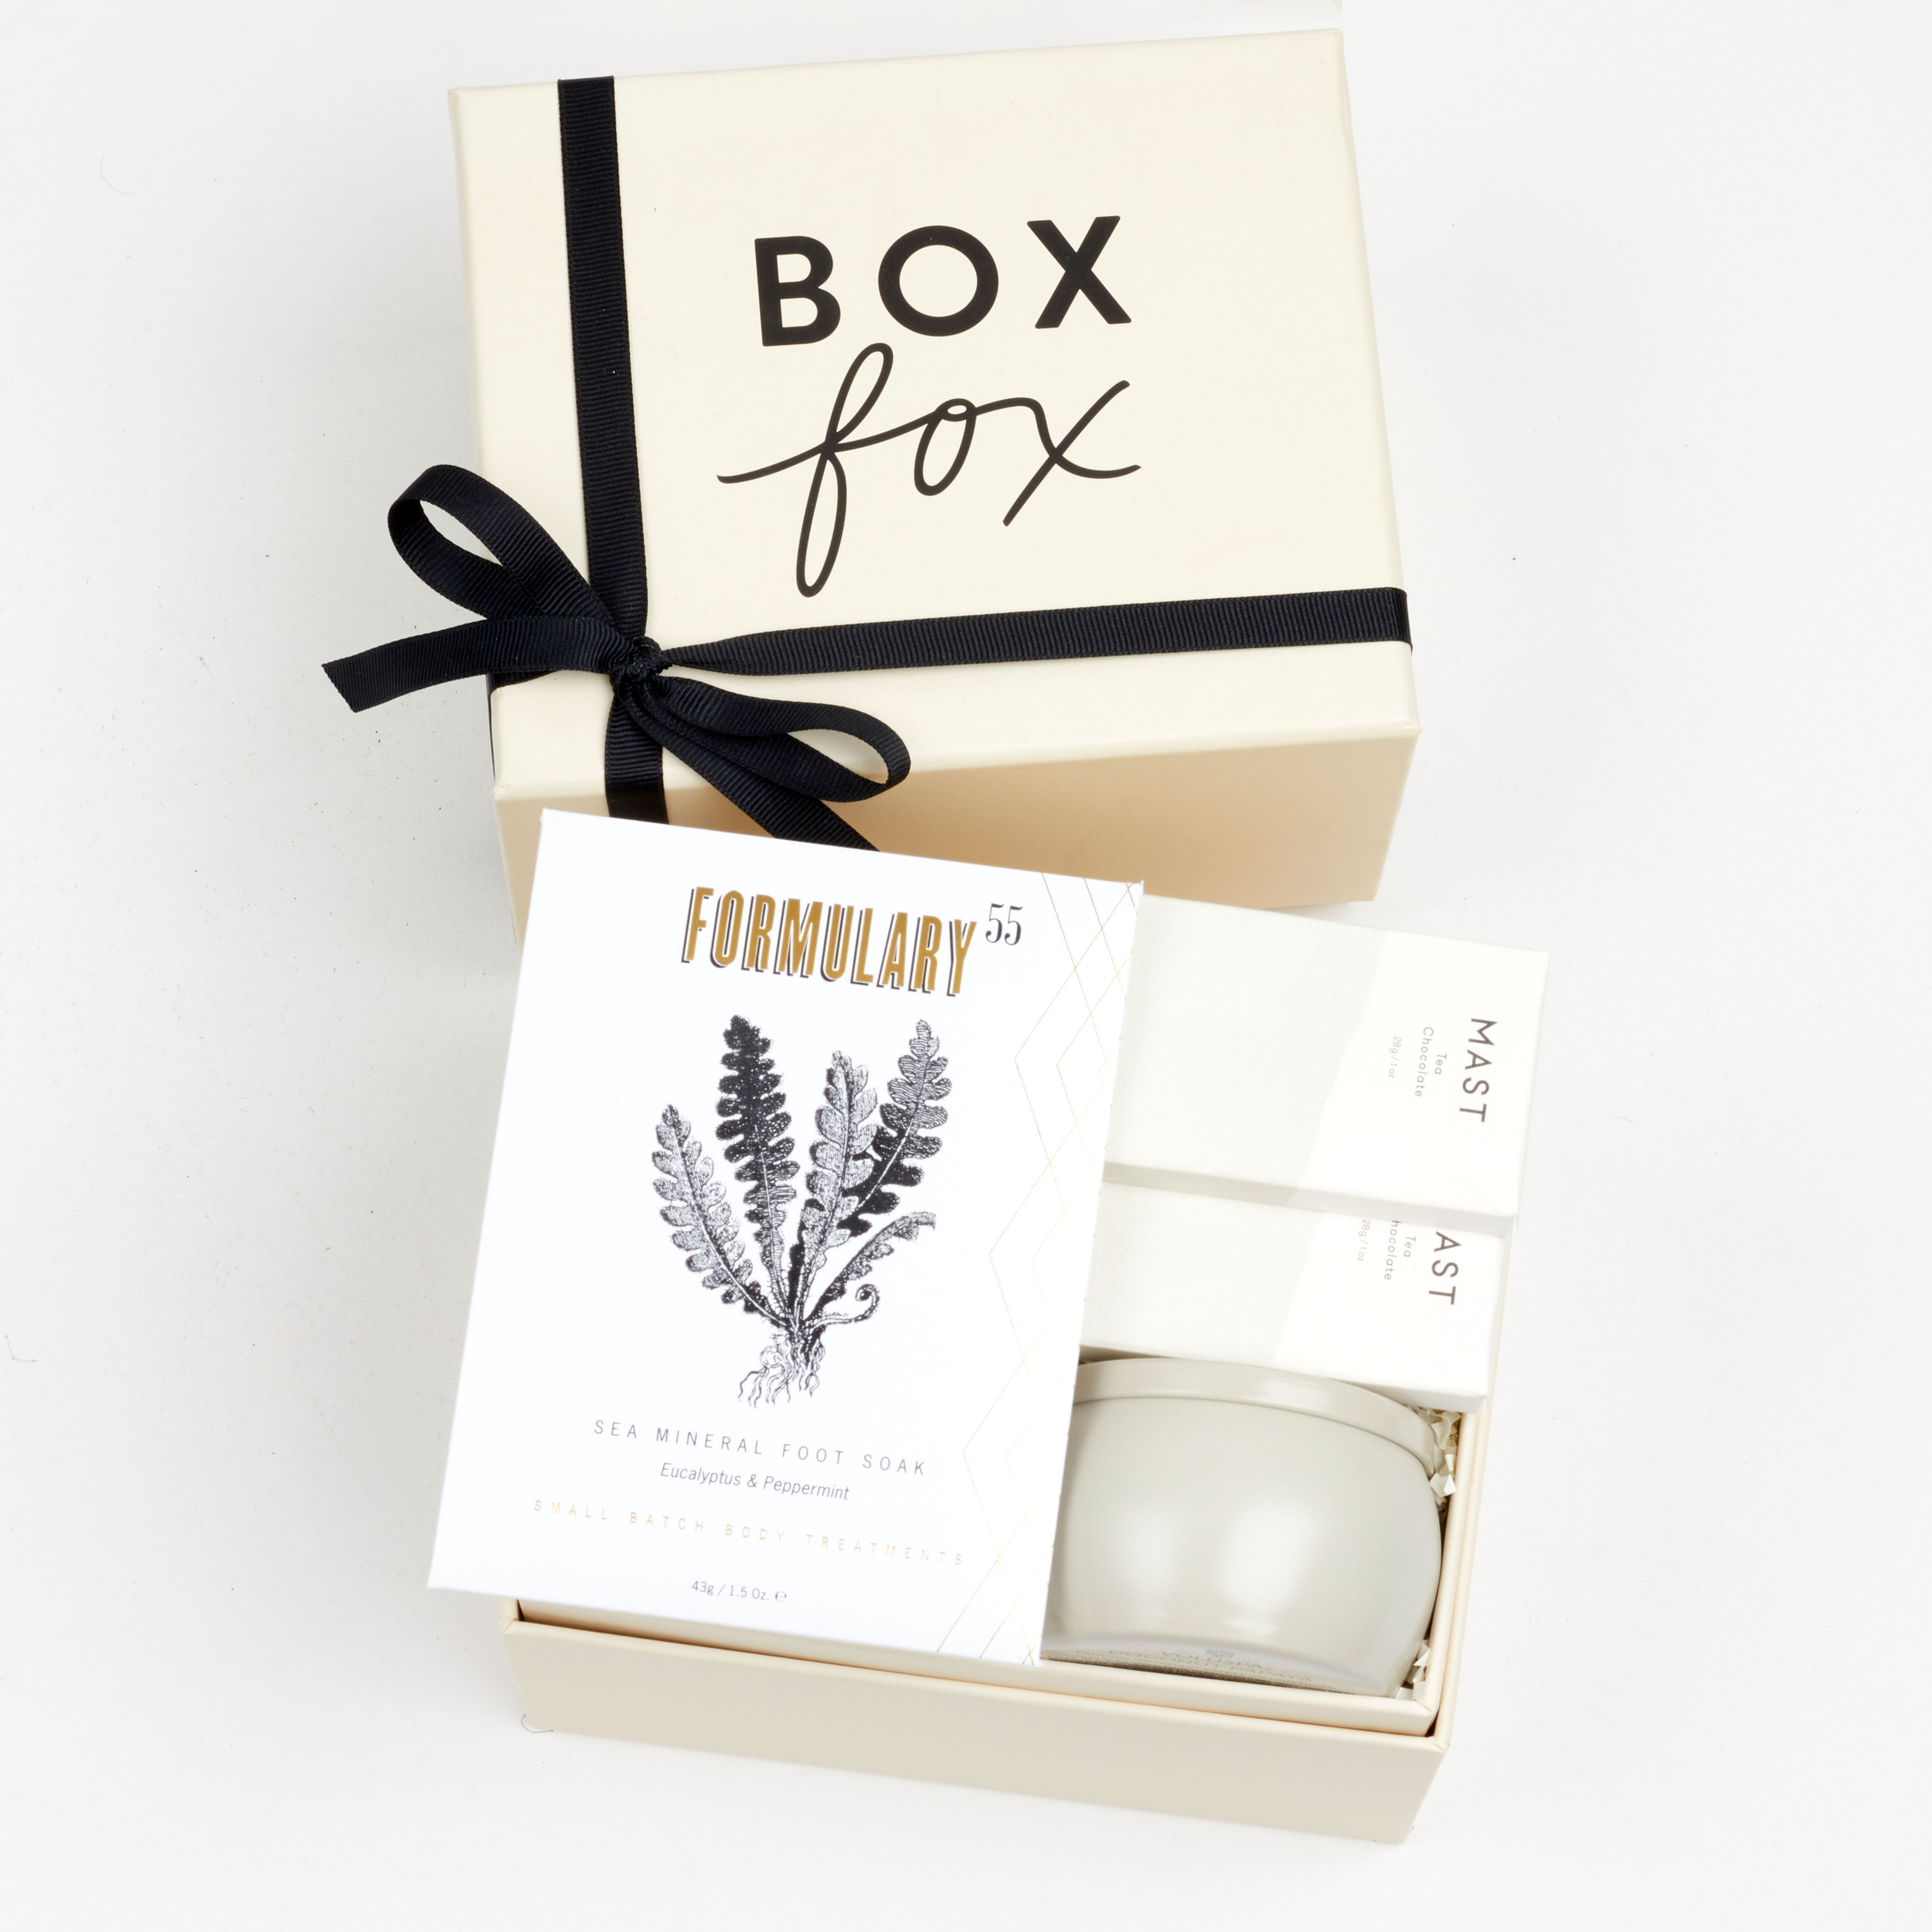 BOXFOX Creme Gift Box filled with Voluspa Coconut Papaya Tin Candle, Formulary 55 Eucalyptus + Peppermint Foot Soak and Mast Brothers 2 Mini Tea Chocolate Bars